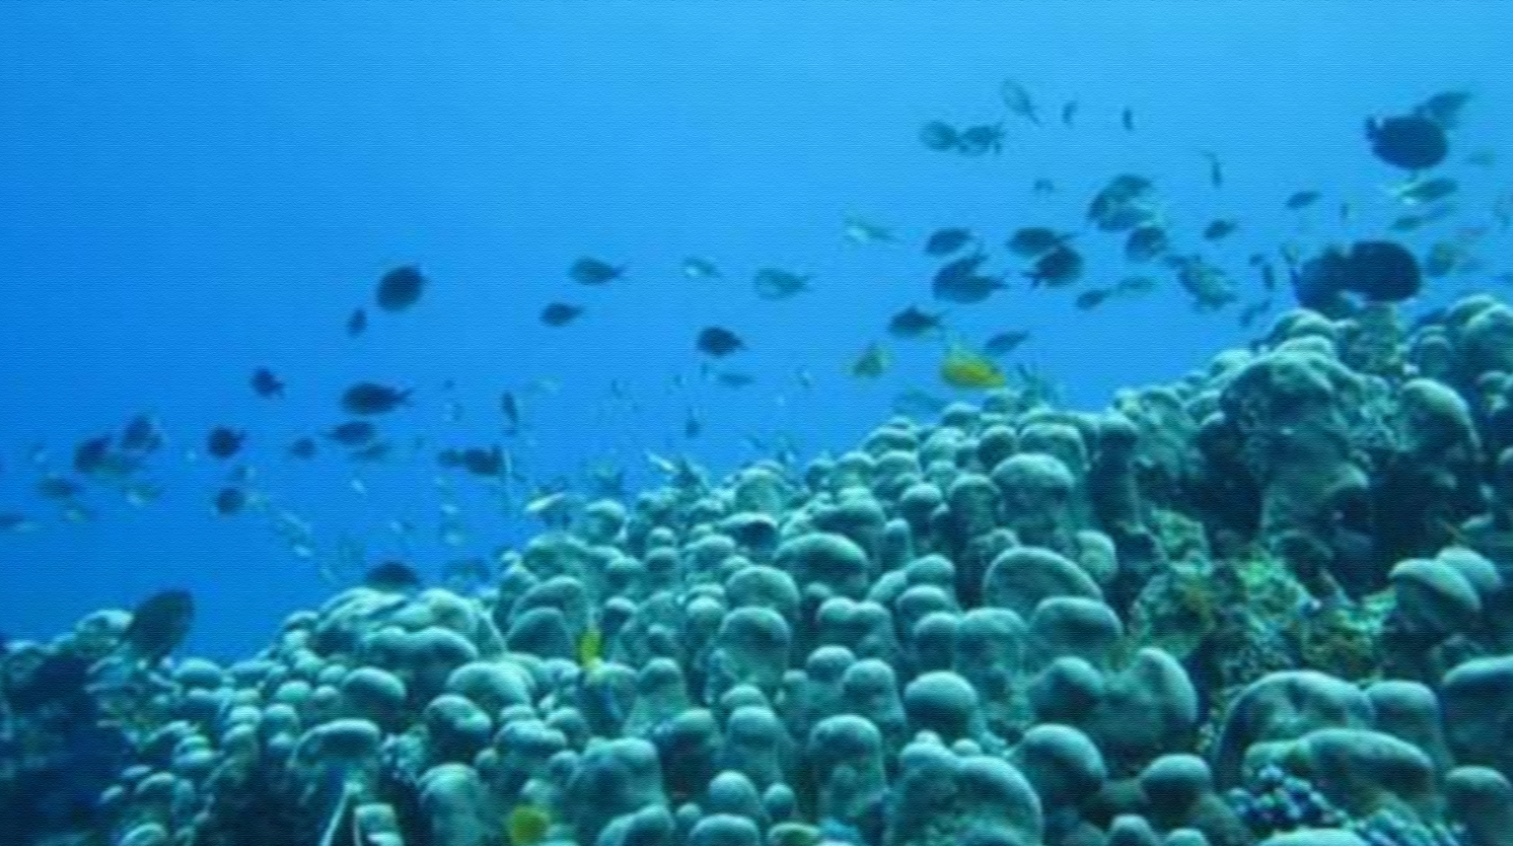 Underwater Tidore yang bikin ngiler imajinasi. foto:google